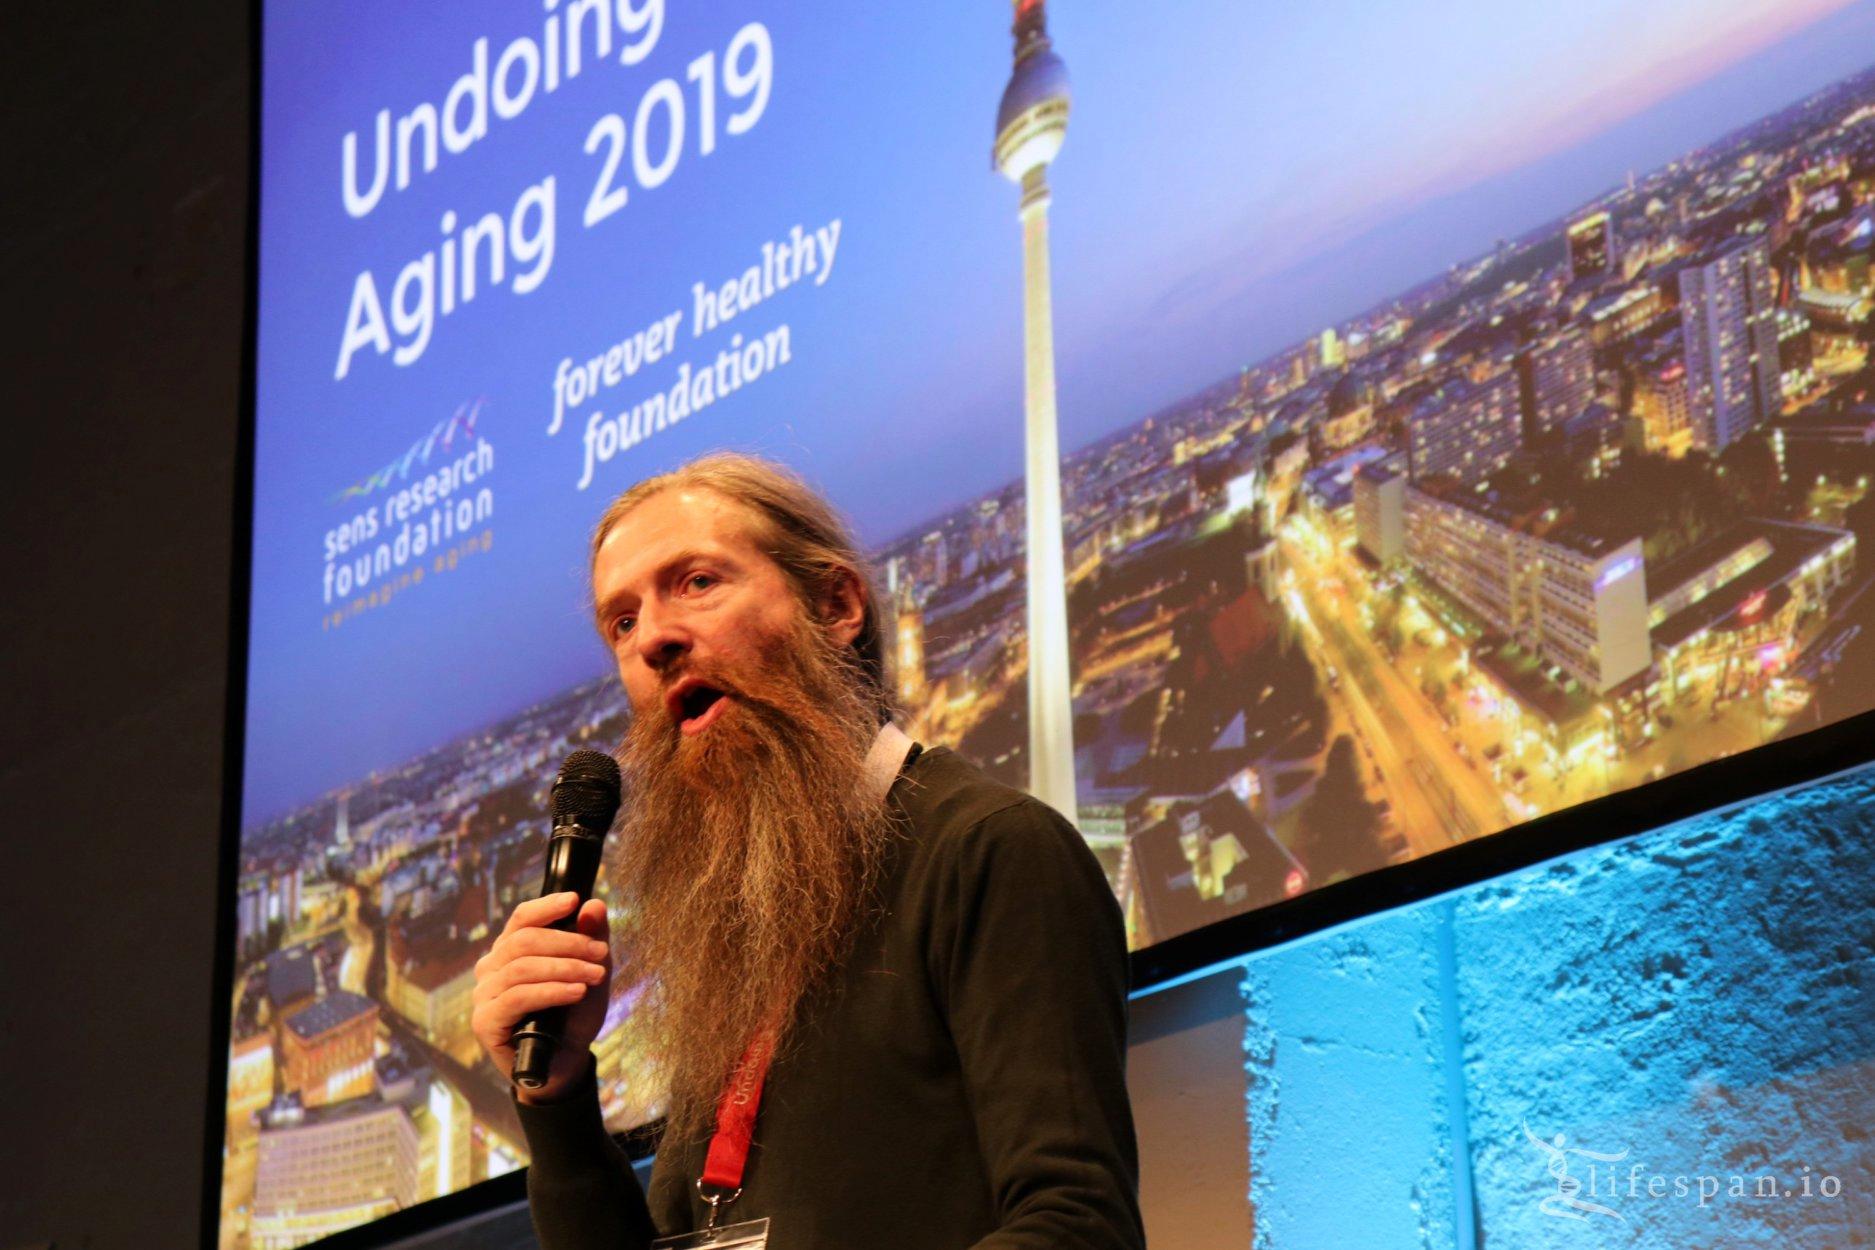 Aubrey de Gray at Undoing Aging 2019